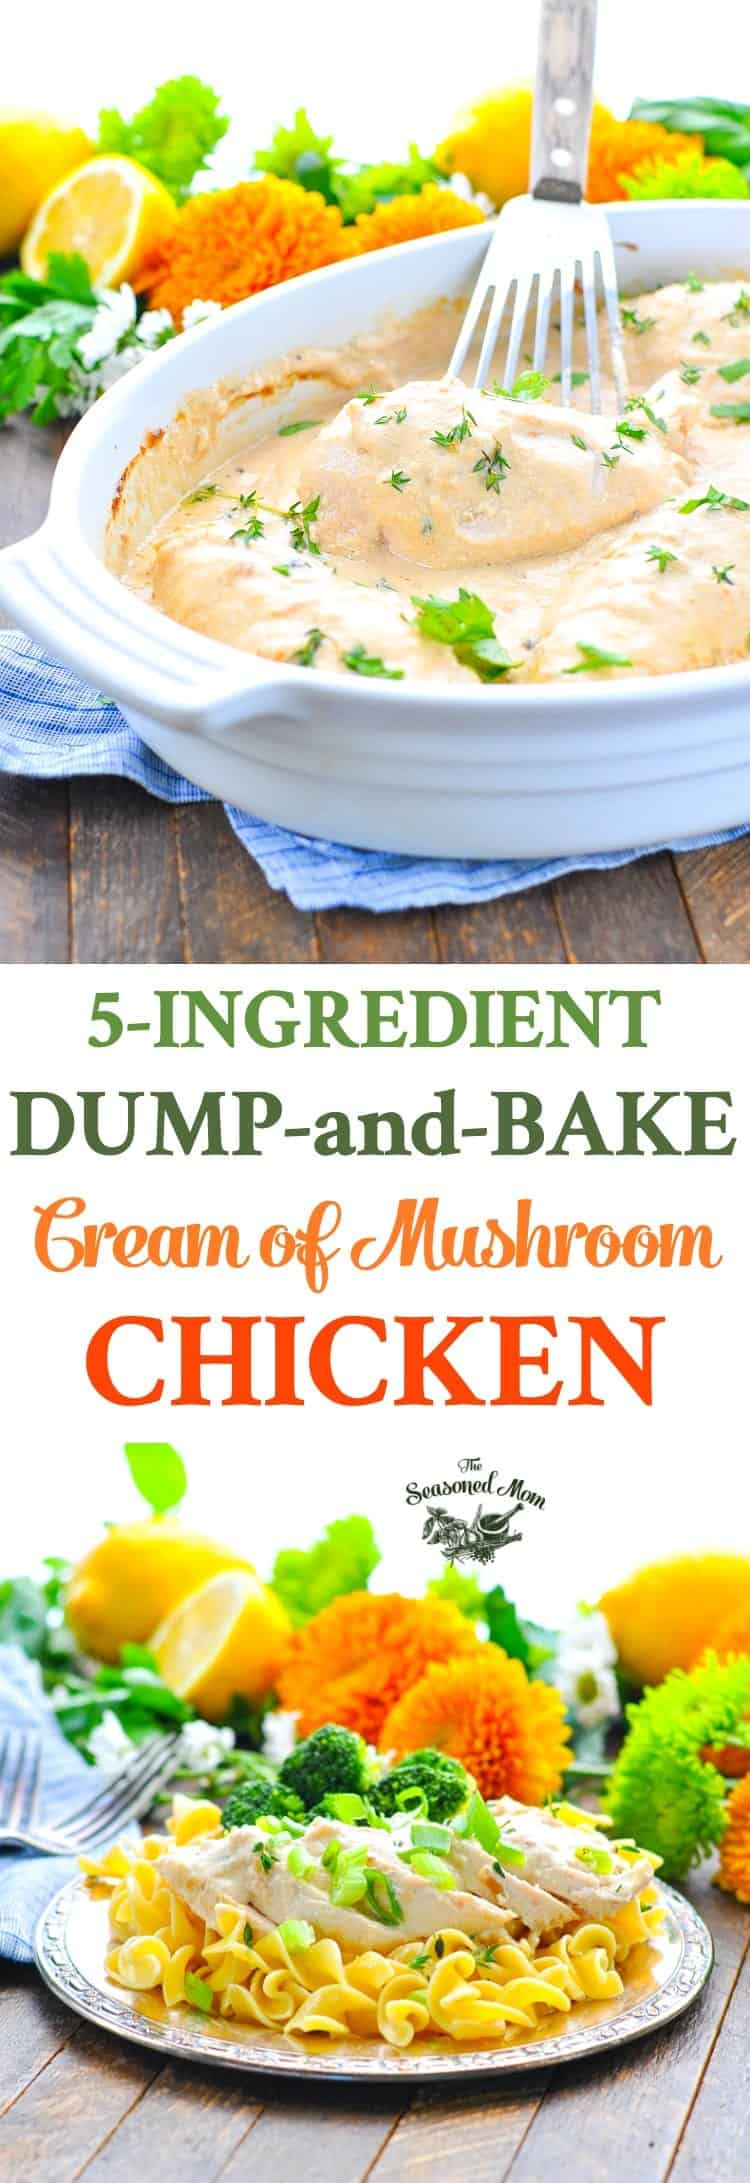 Baked Chicken Breast With Mushrooms
 Dump and Bake Cream of Mushroom Chicken The Seasoned Mom